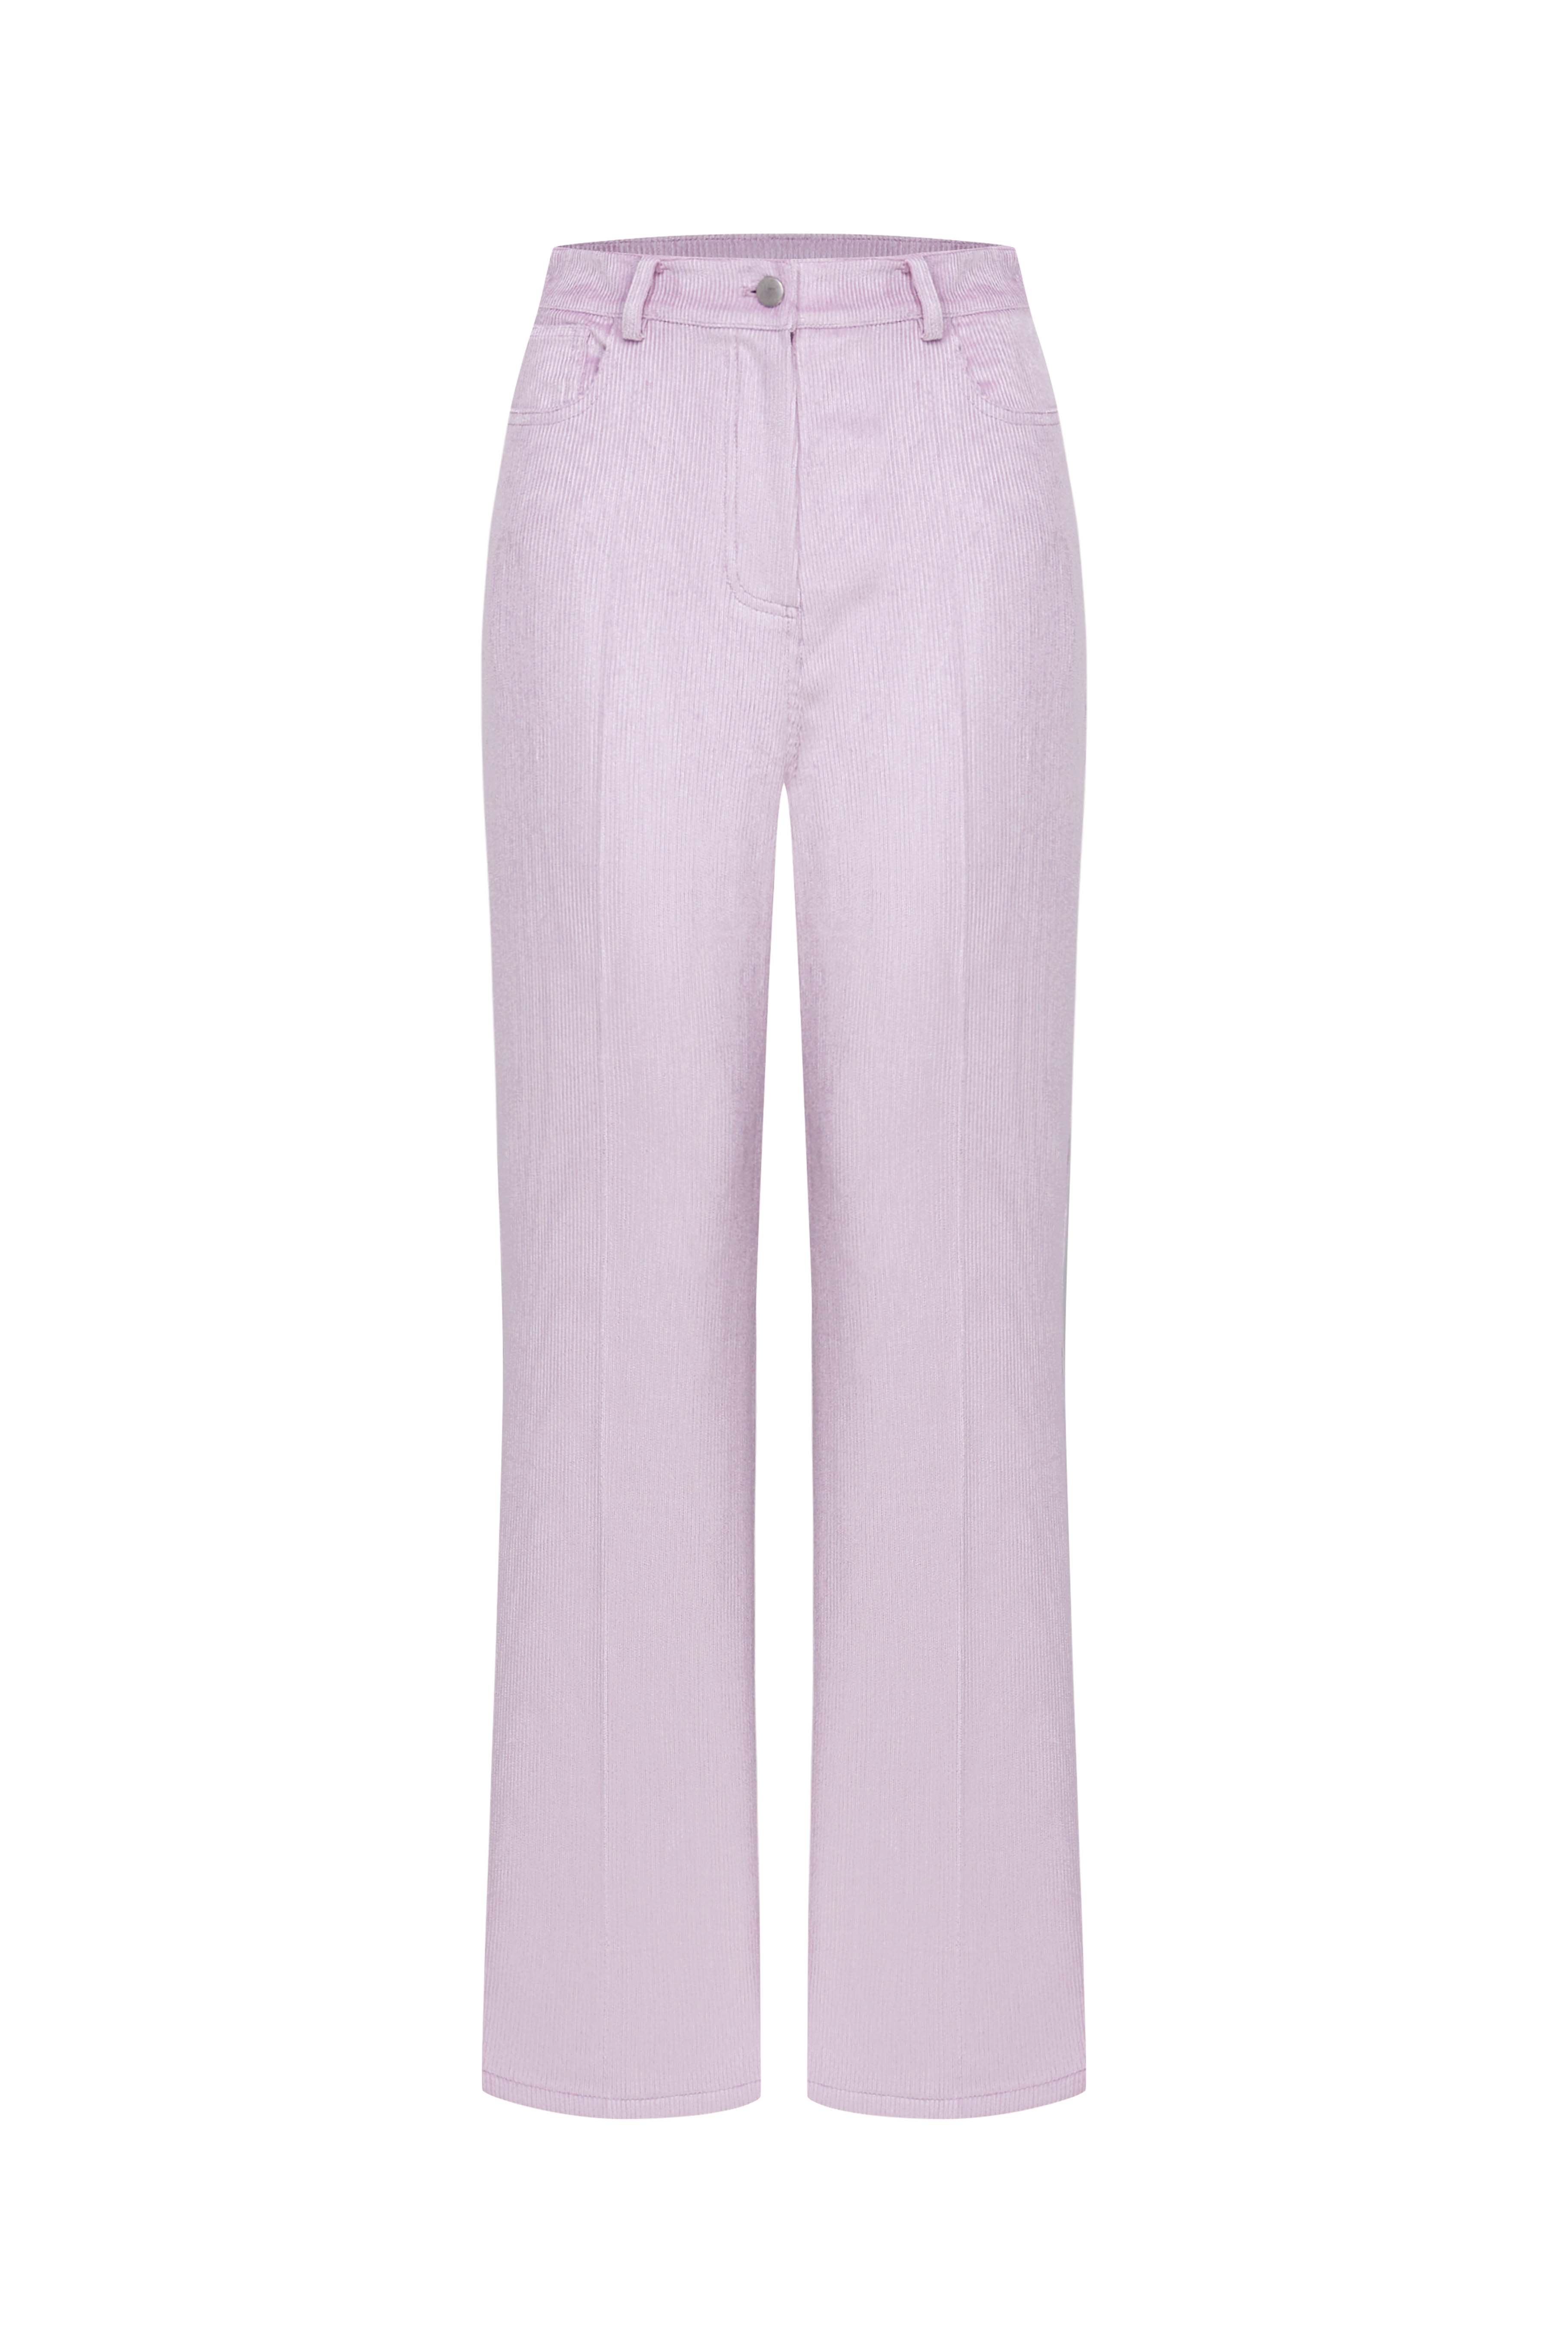 90s Shiny Corduroy Pants (Lavender) - 포니테일